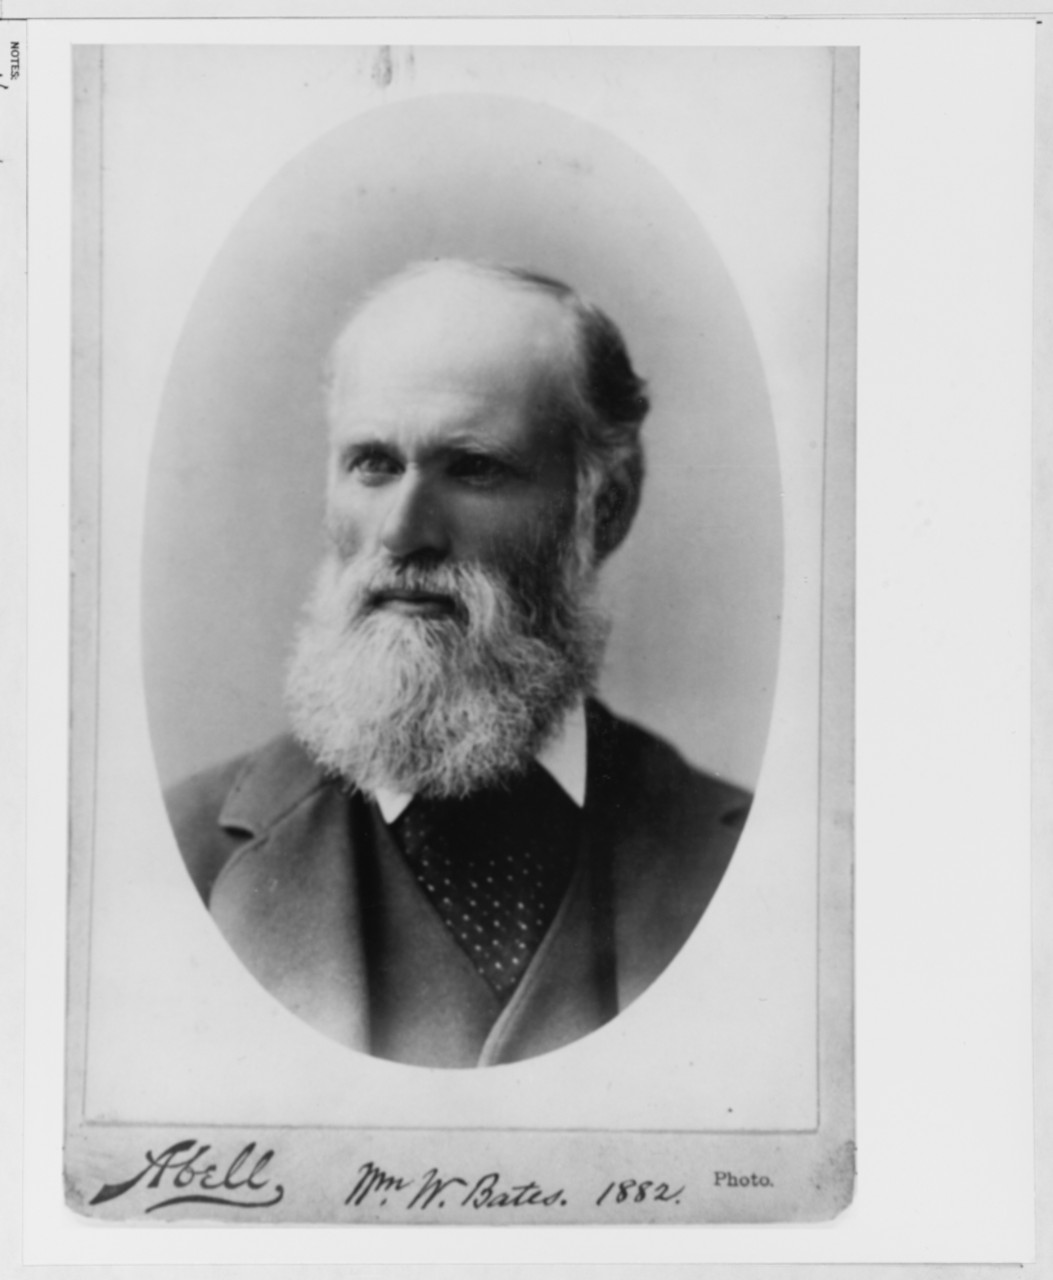 Ship Architect William W. Bates